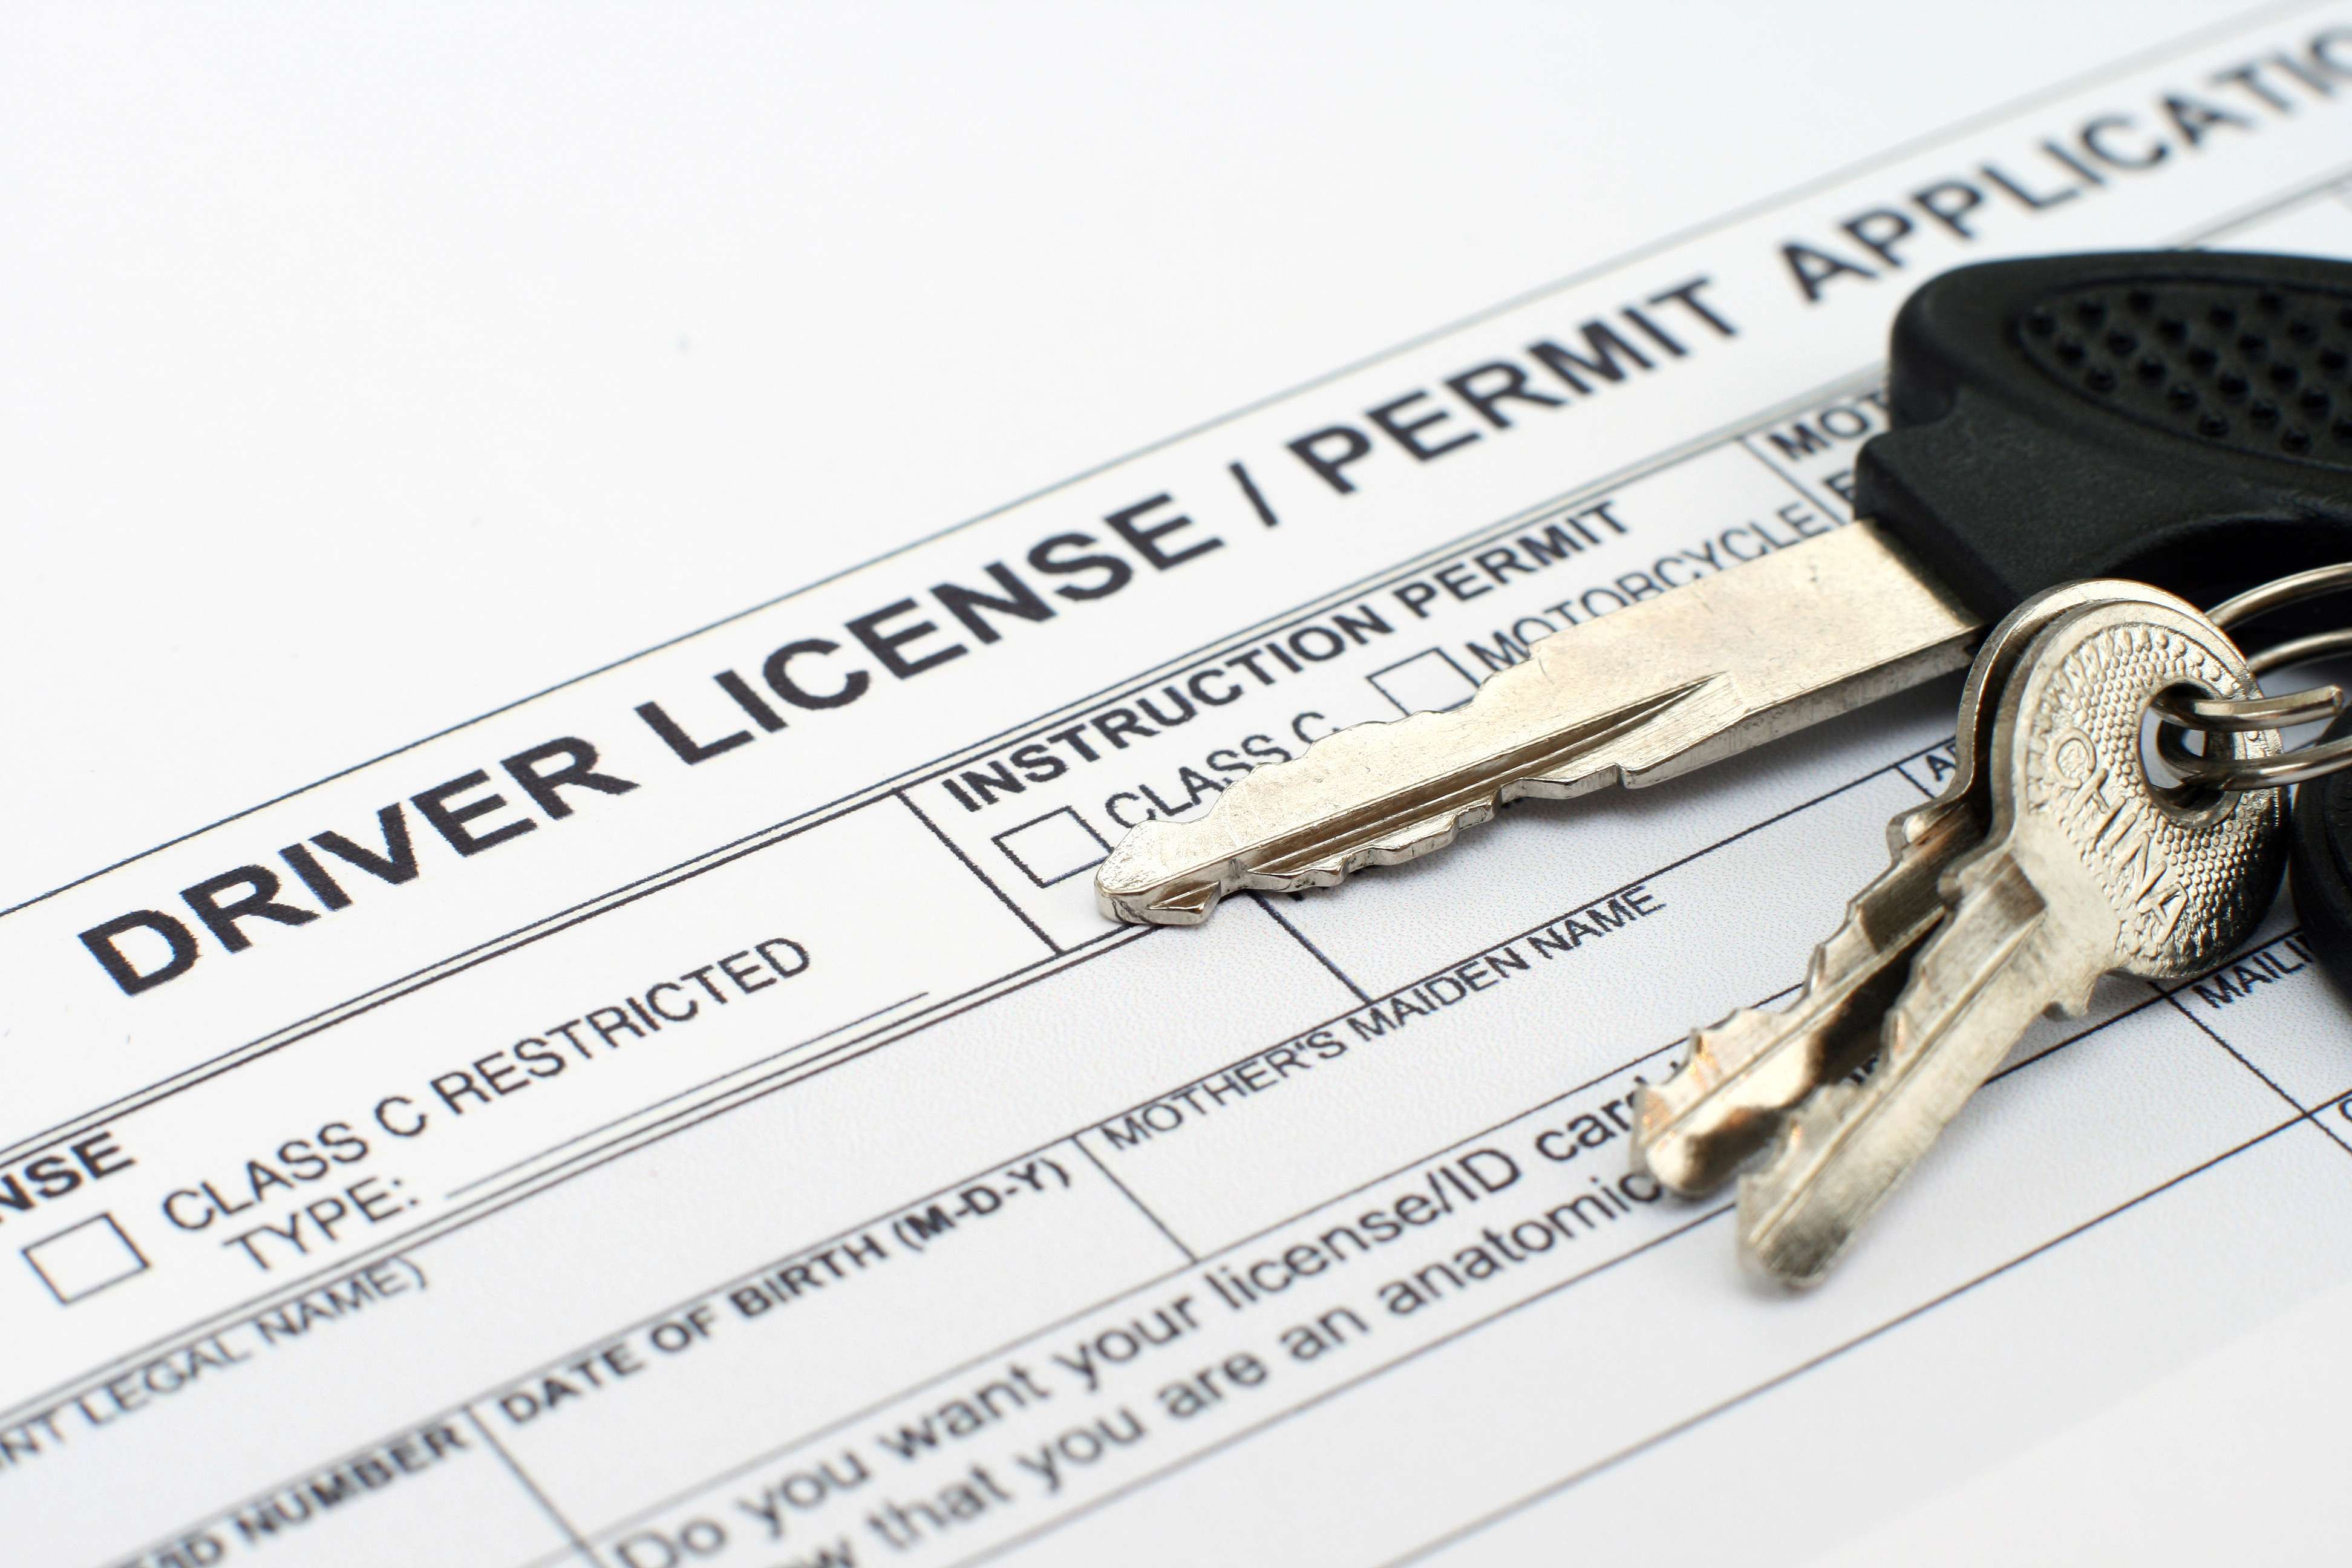 Driver license application (photo credit: Graphicstock)